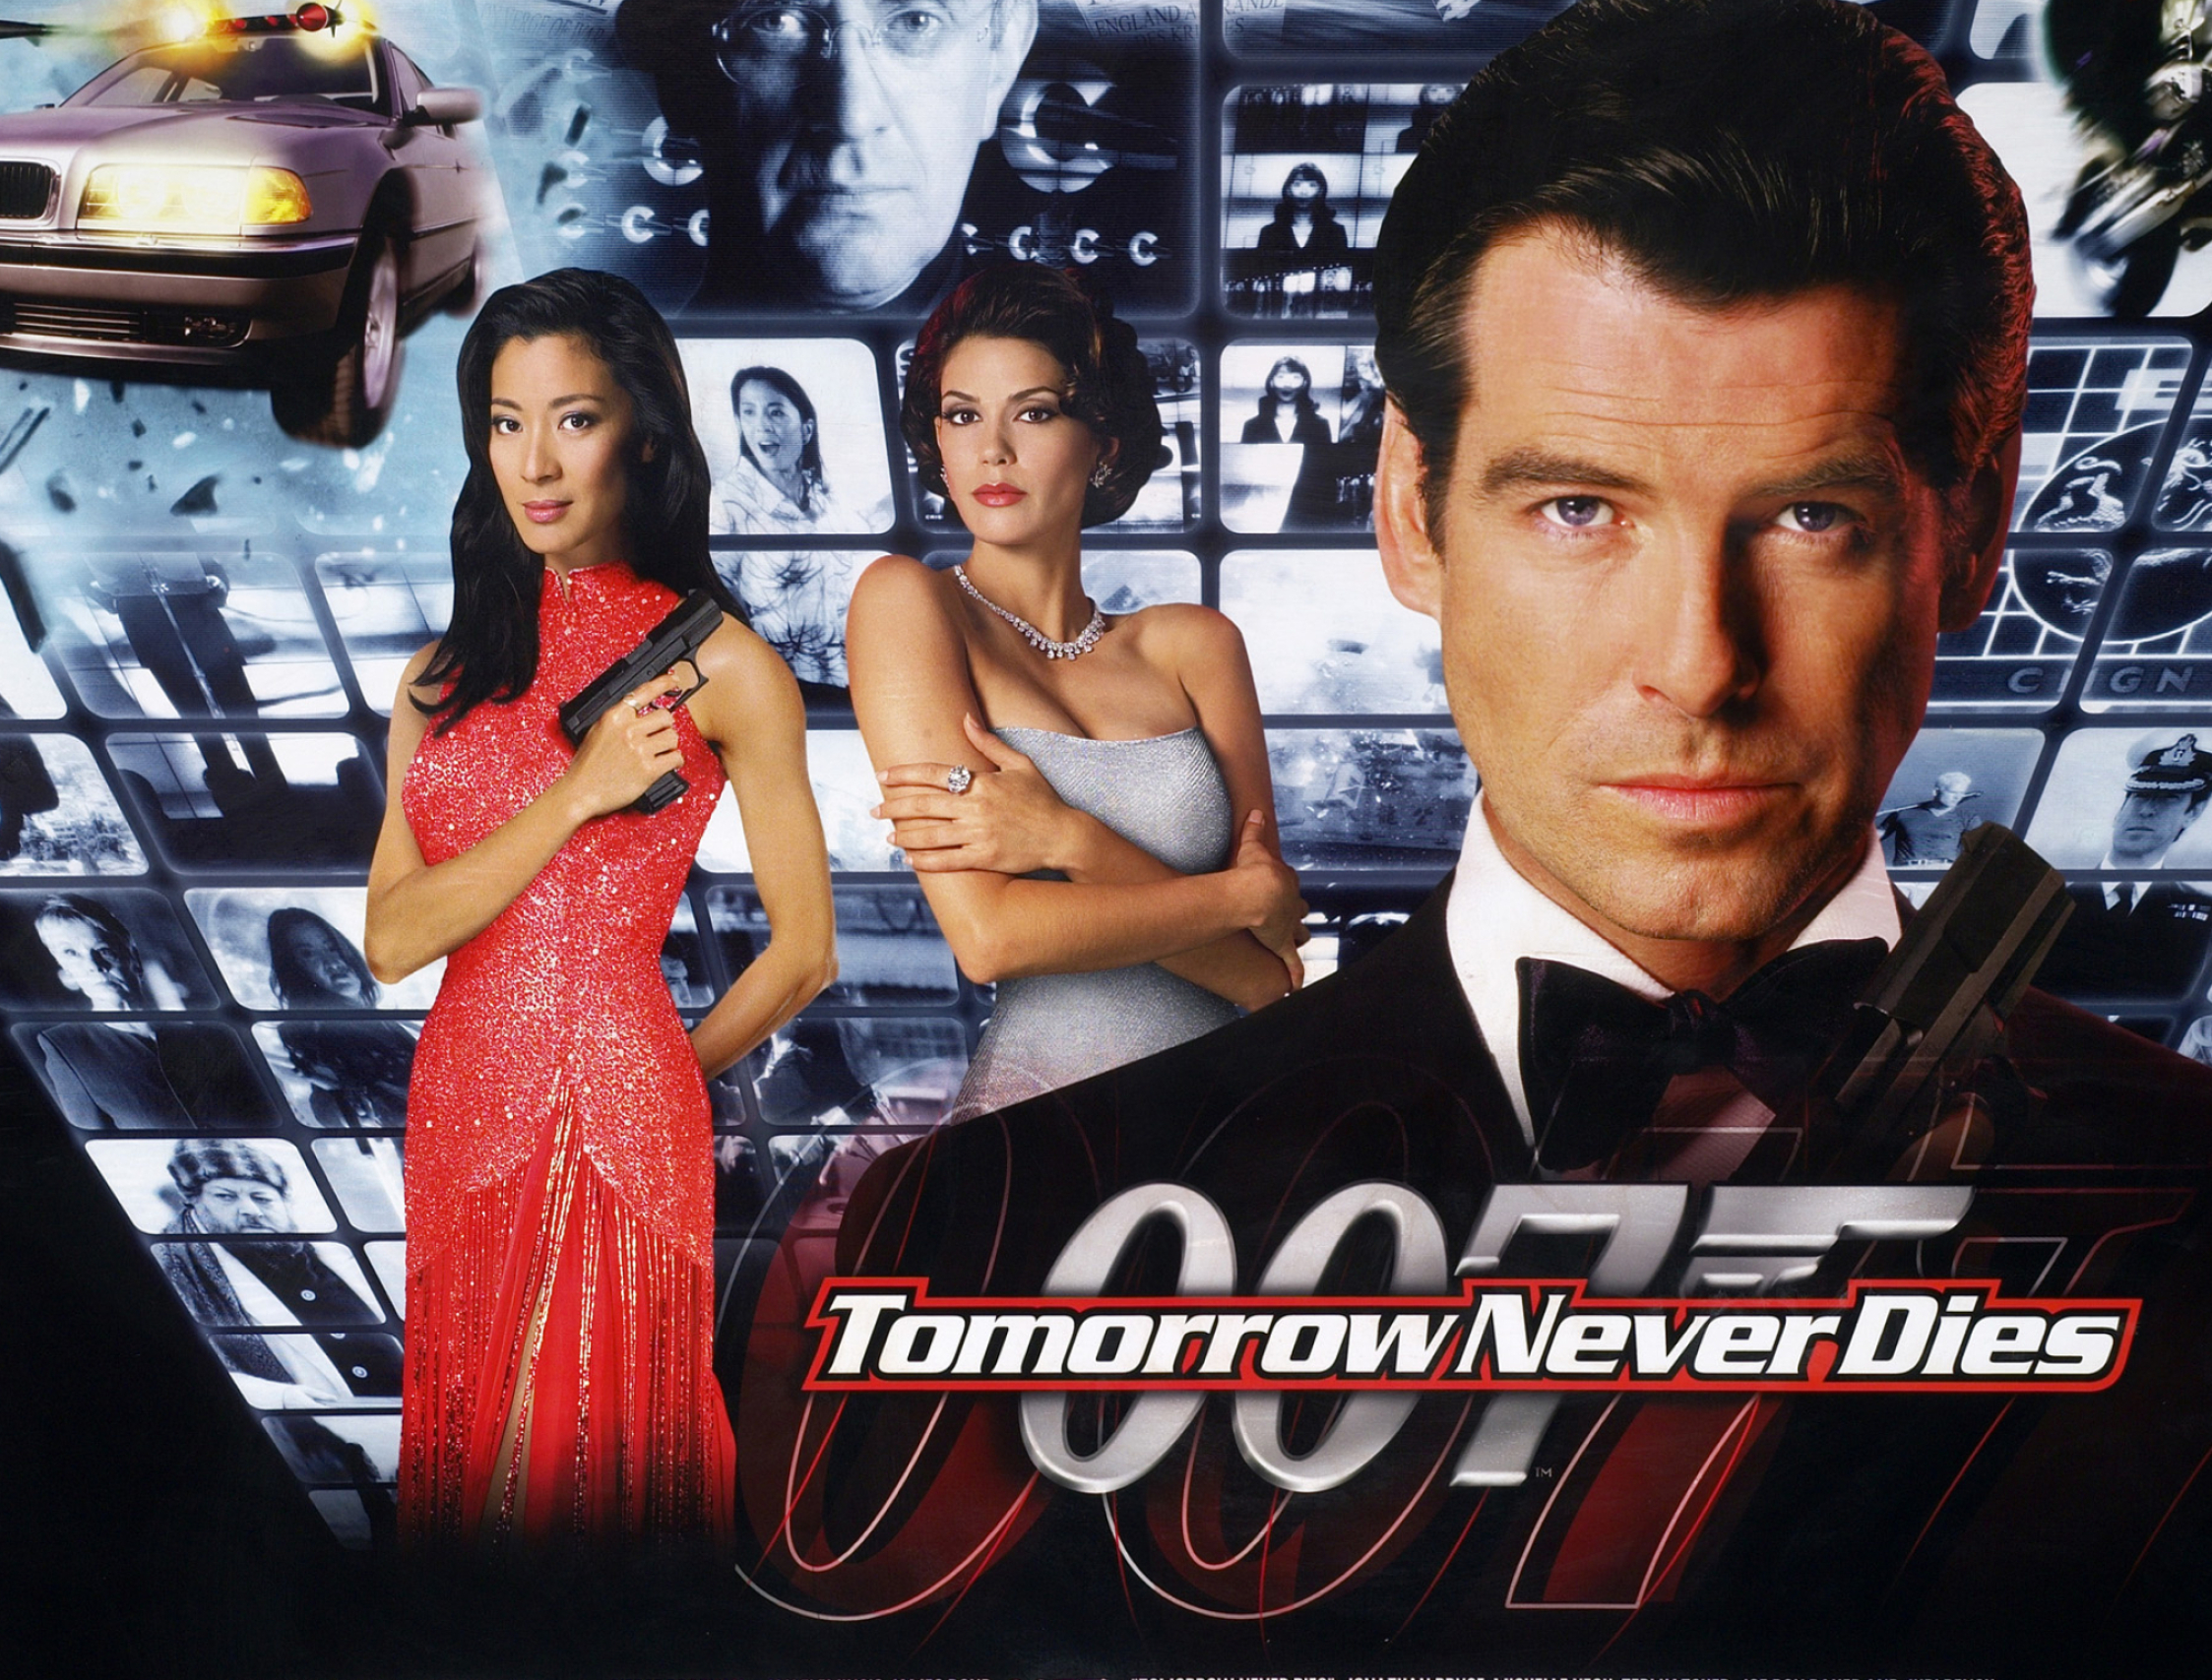 James Bond movie posters, Brosnan era, Thrilling films, Collectible art, 2250x1710 HD Desktop